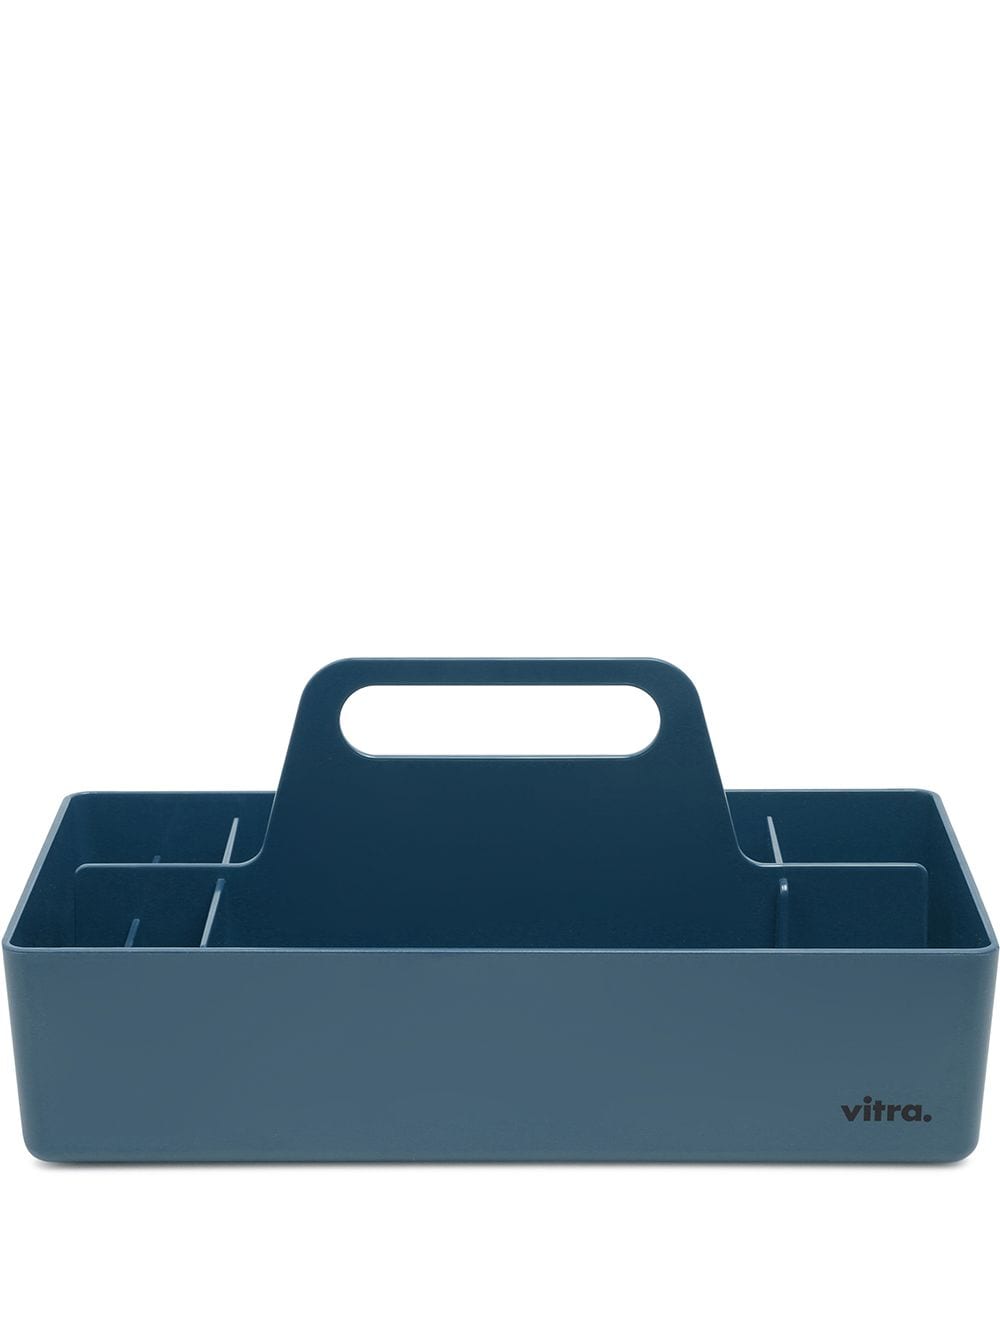 Vitra Diy Tool Box In Blue